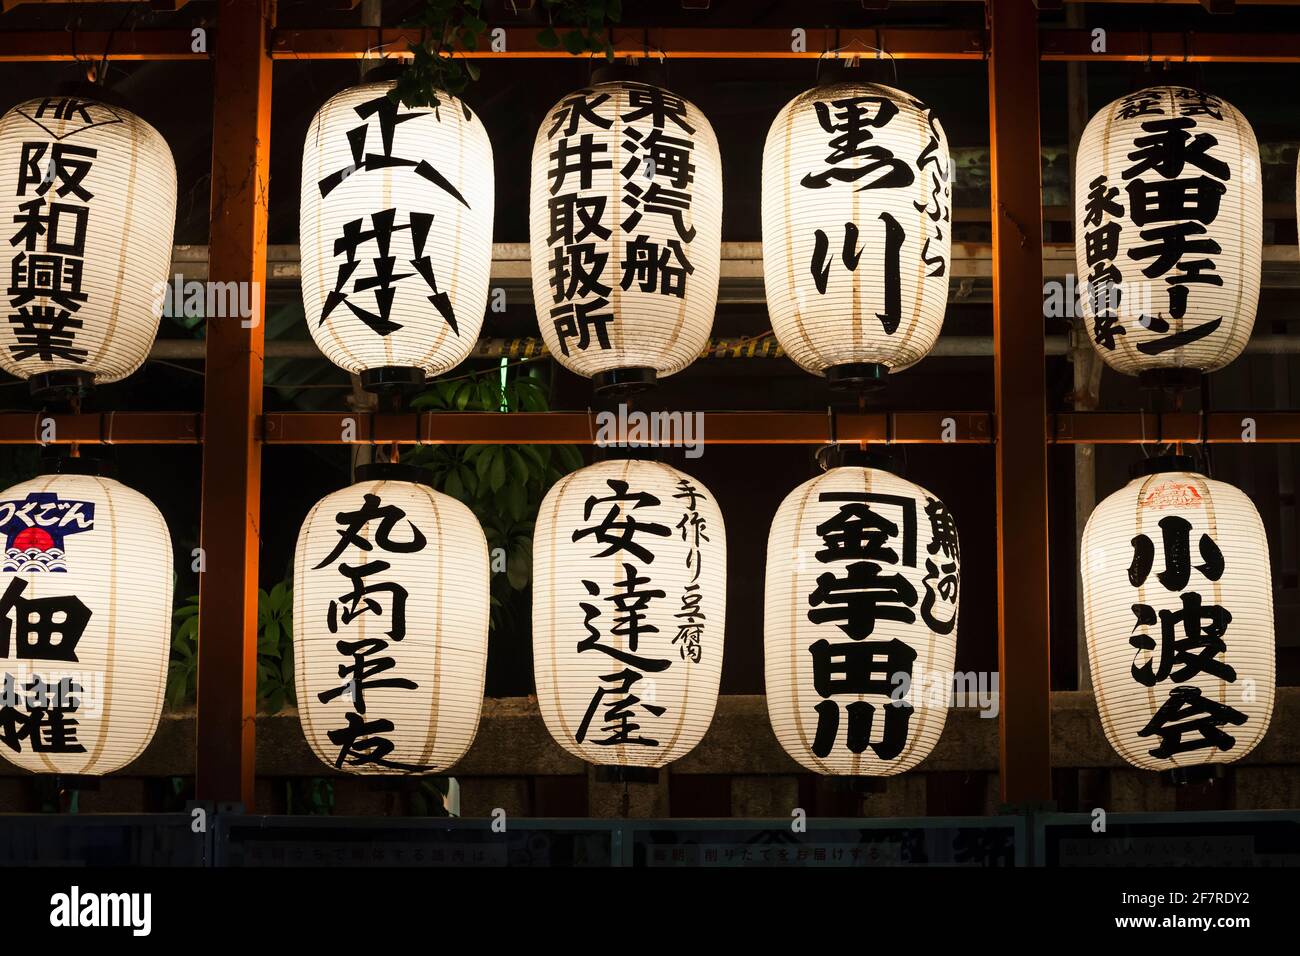 Horizontal view of two rows of illuminated Chinese lanterns in Namiyoke-jinja Shinto shrine at night, Tsukiji, Tokyo, Japan Stock Photo